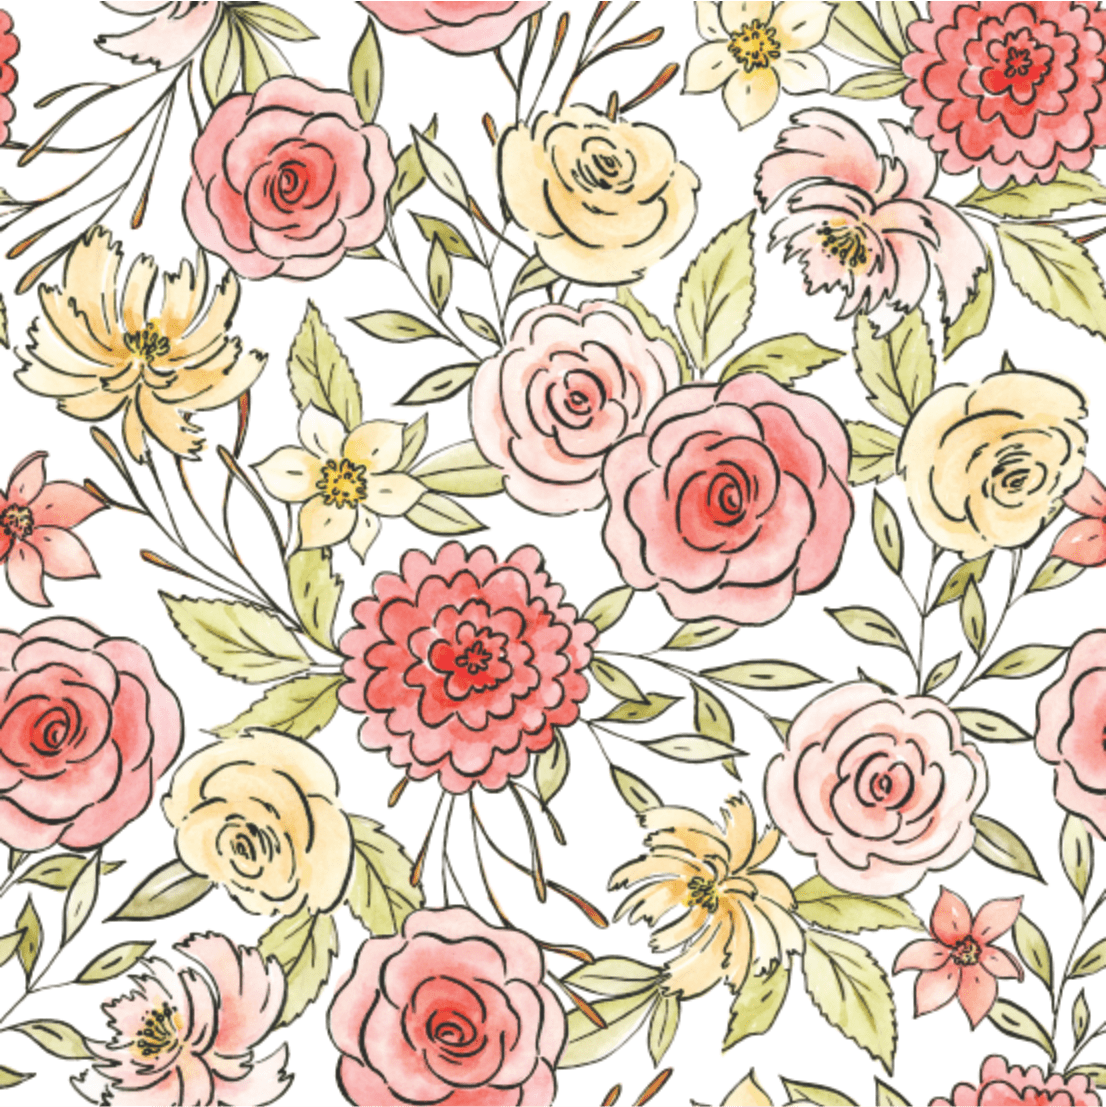 Billie Colourful Floral Wallpaper